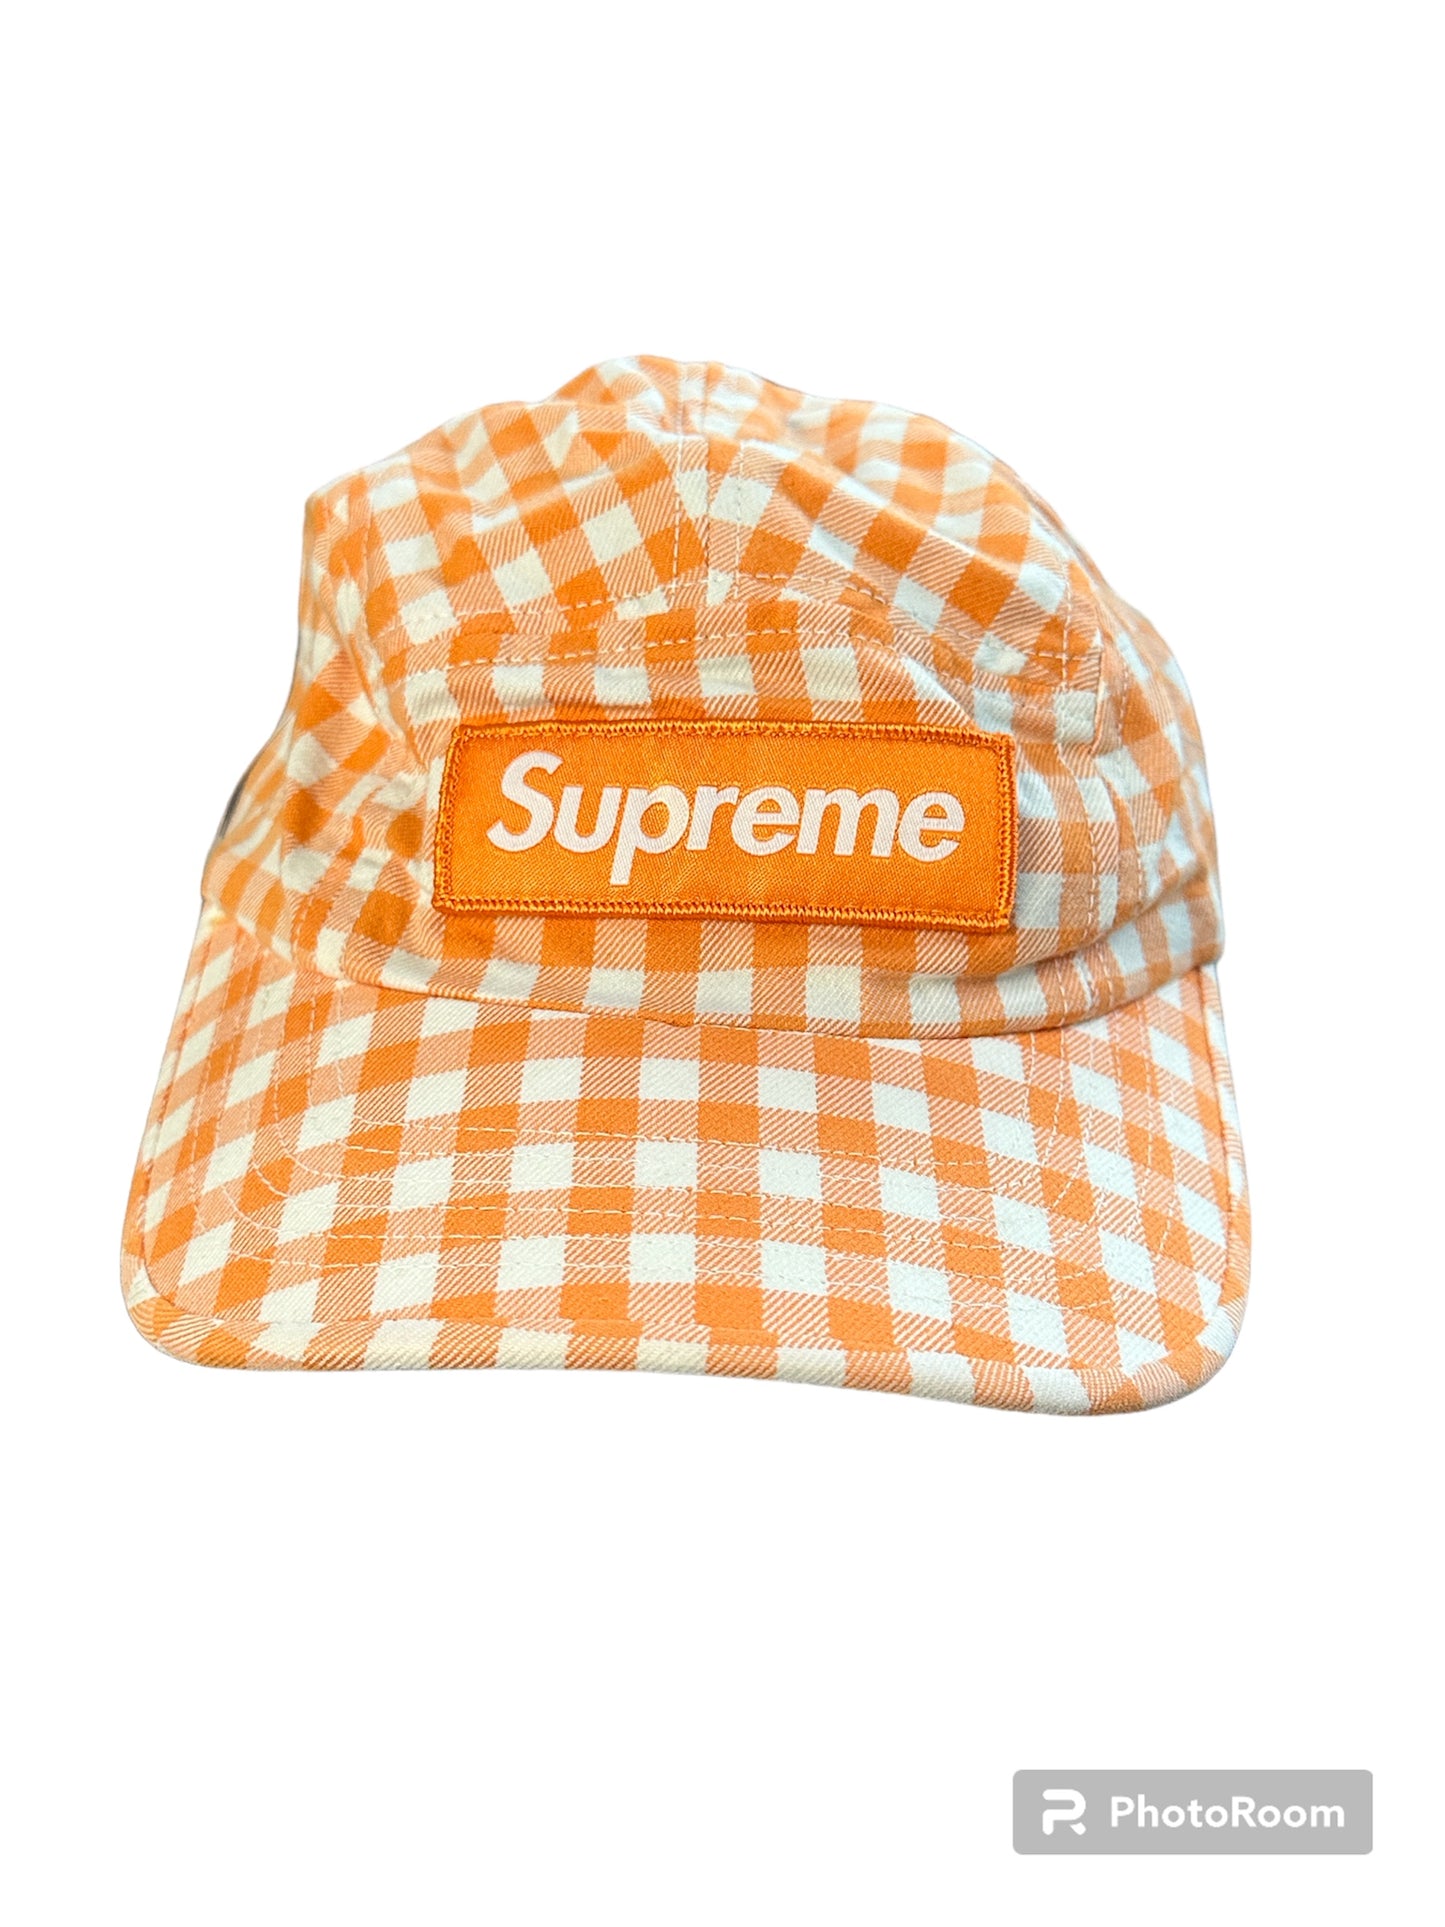 Supreme orange plaid hat